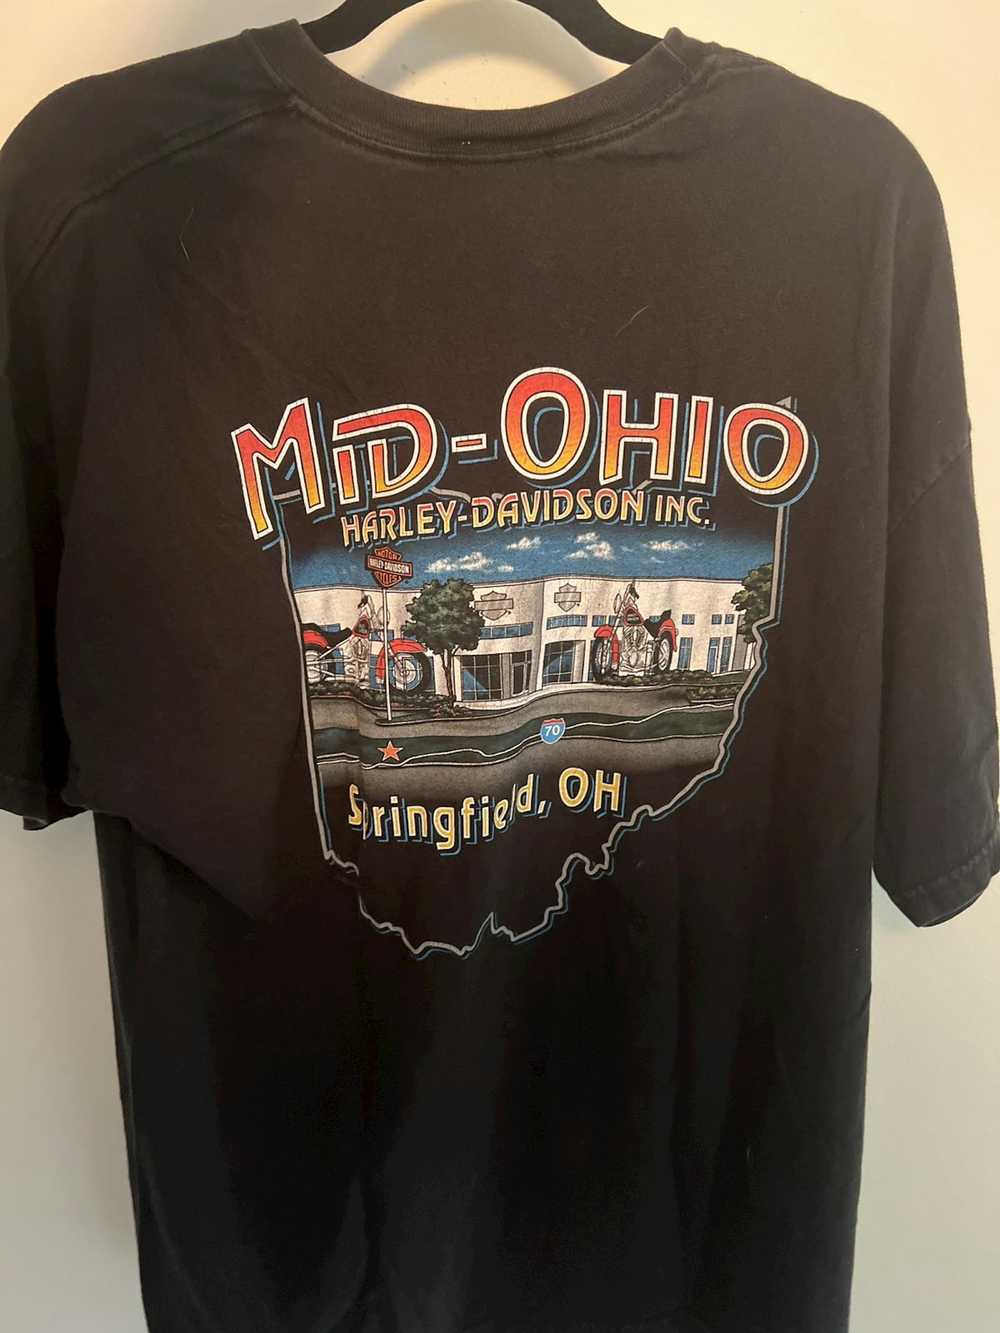 Harley Davidson Harley t shirts - image 1